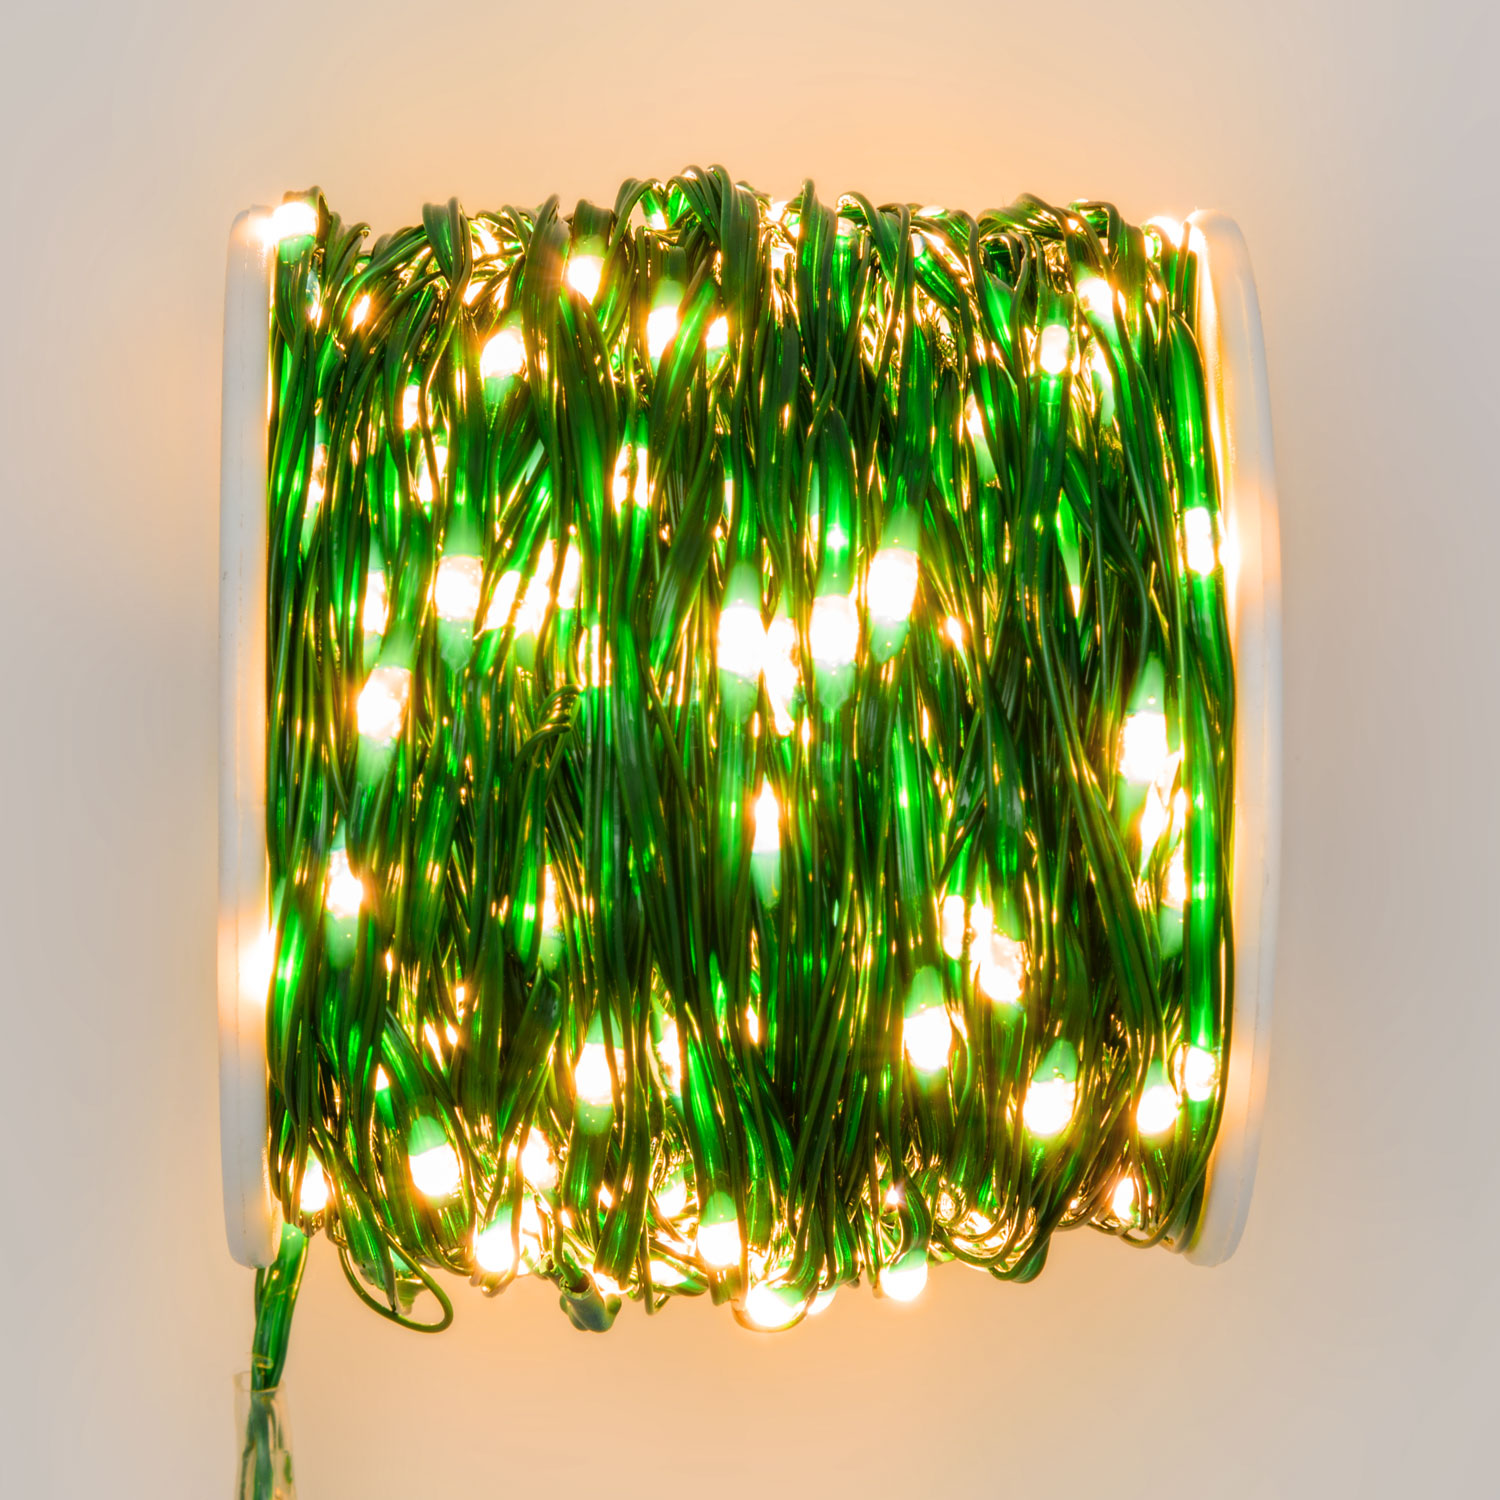 Гирлянда Lotti профессионал 25 м 500 microLEDs, цвет зеленый - фото 3